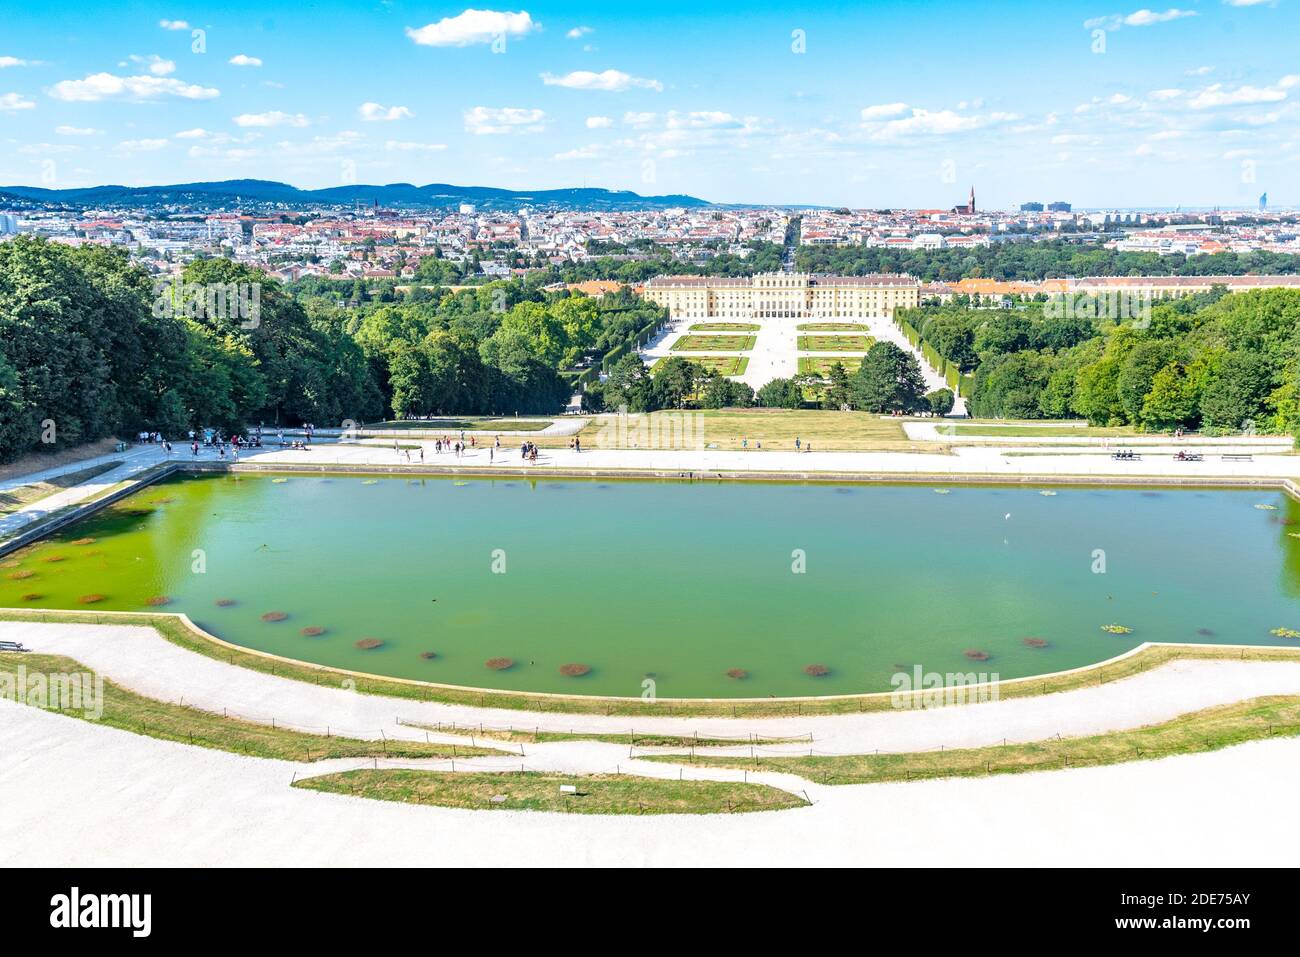 VIENNA, AUSTRIA - 23 JULY, 2019: Schonbrunn Palace, German - Schloss Schonbrunn, and Great Parterre - French Garden with beautiful flower beds. View from The Gloriette. Vienna, Austria. Stock Photo